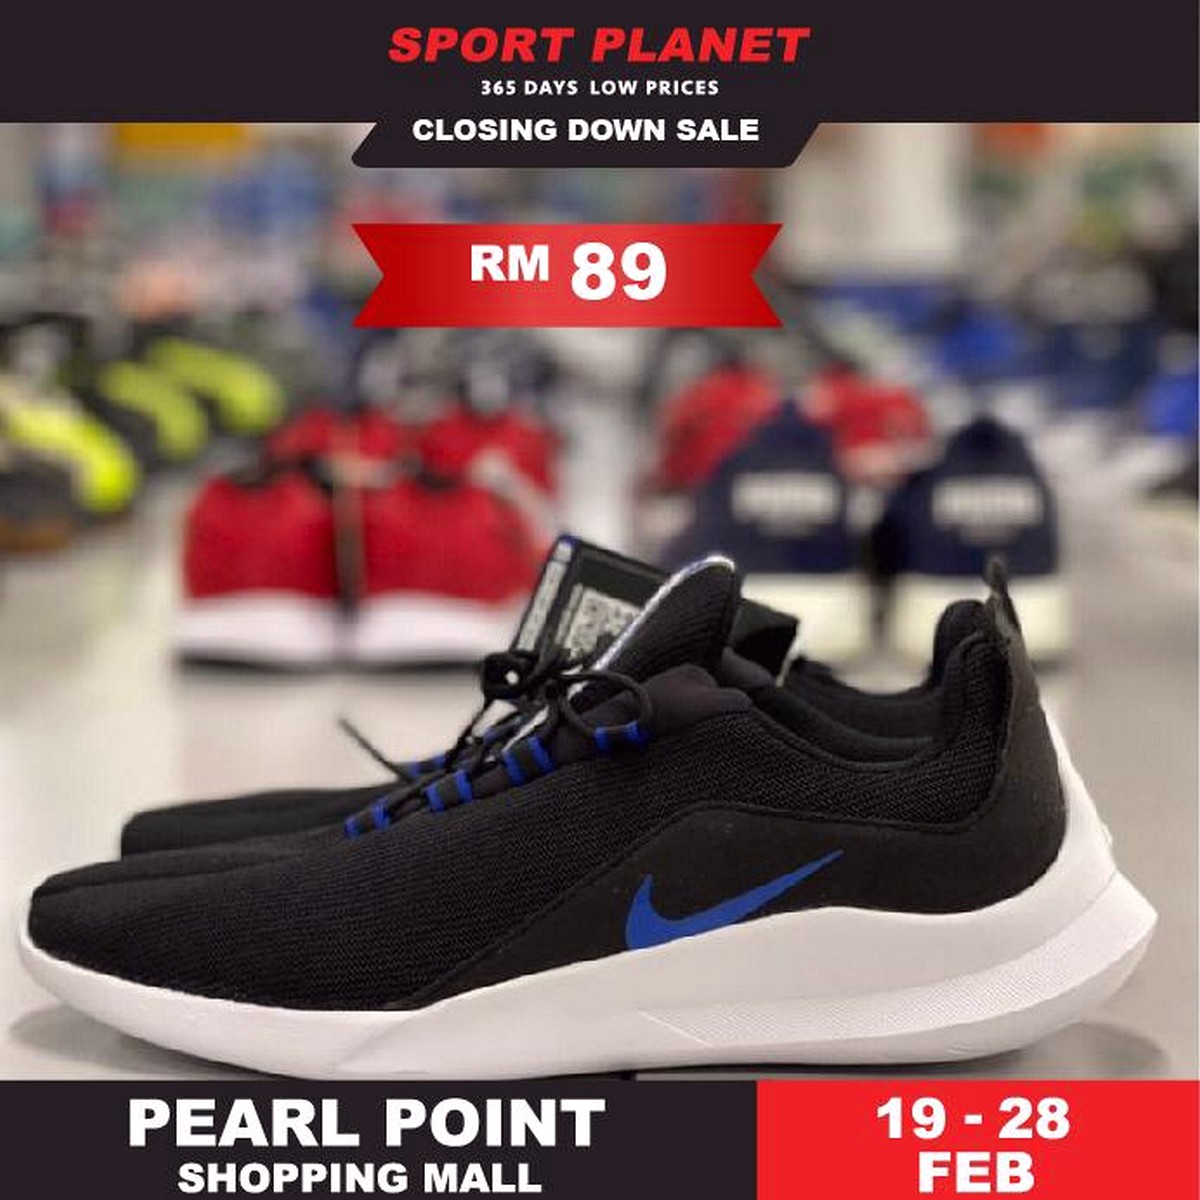 sports-planet-warehouse-sale-002 - Apparels Fashion Accessories Fashion Lifestyle & Department Store Footwear Kuala Lumpur Selangor Sportswear Warehouse Sale & Clearance in Malaysia 